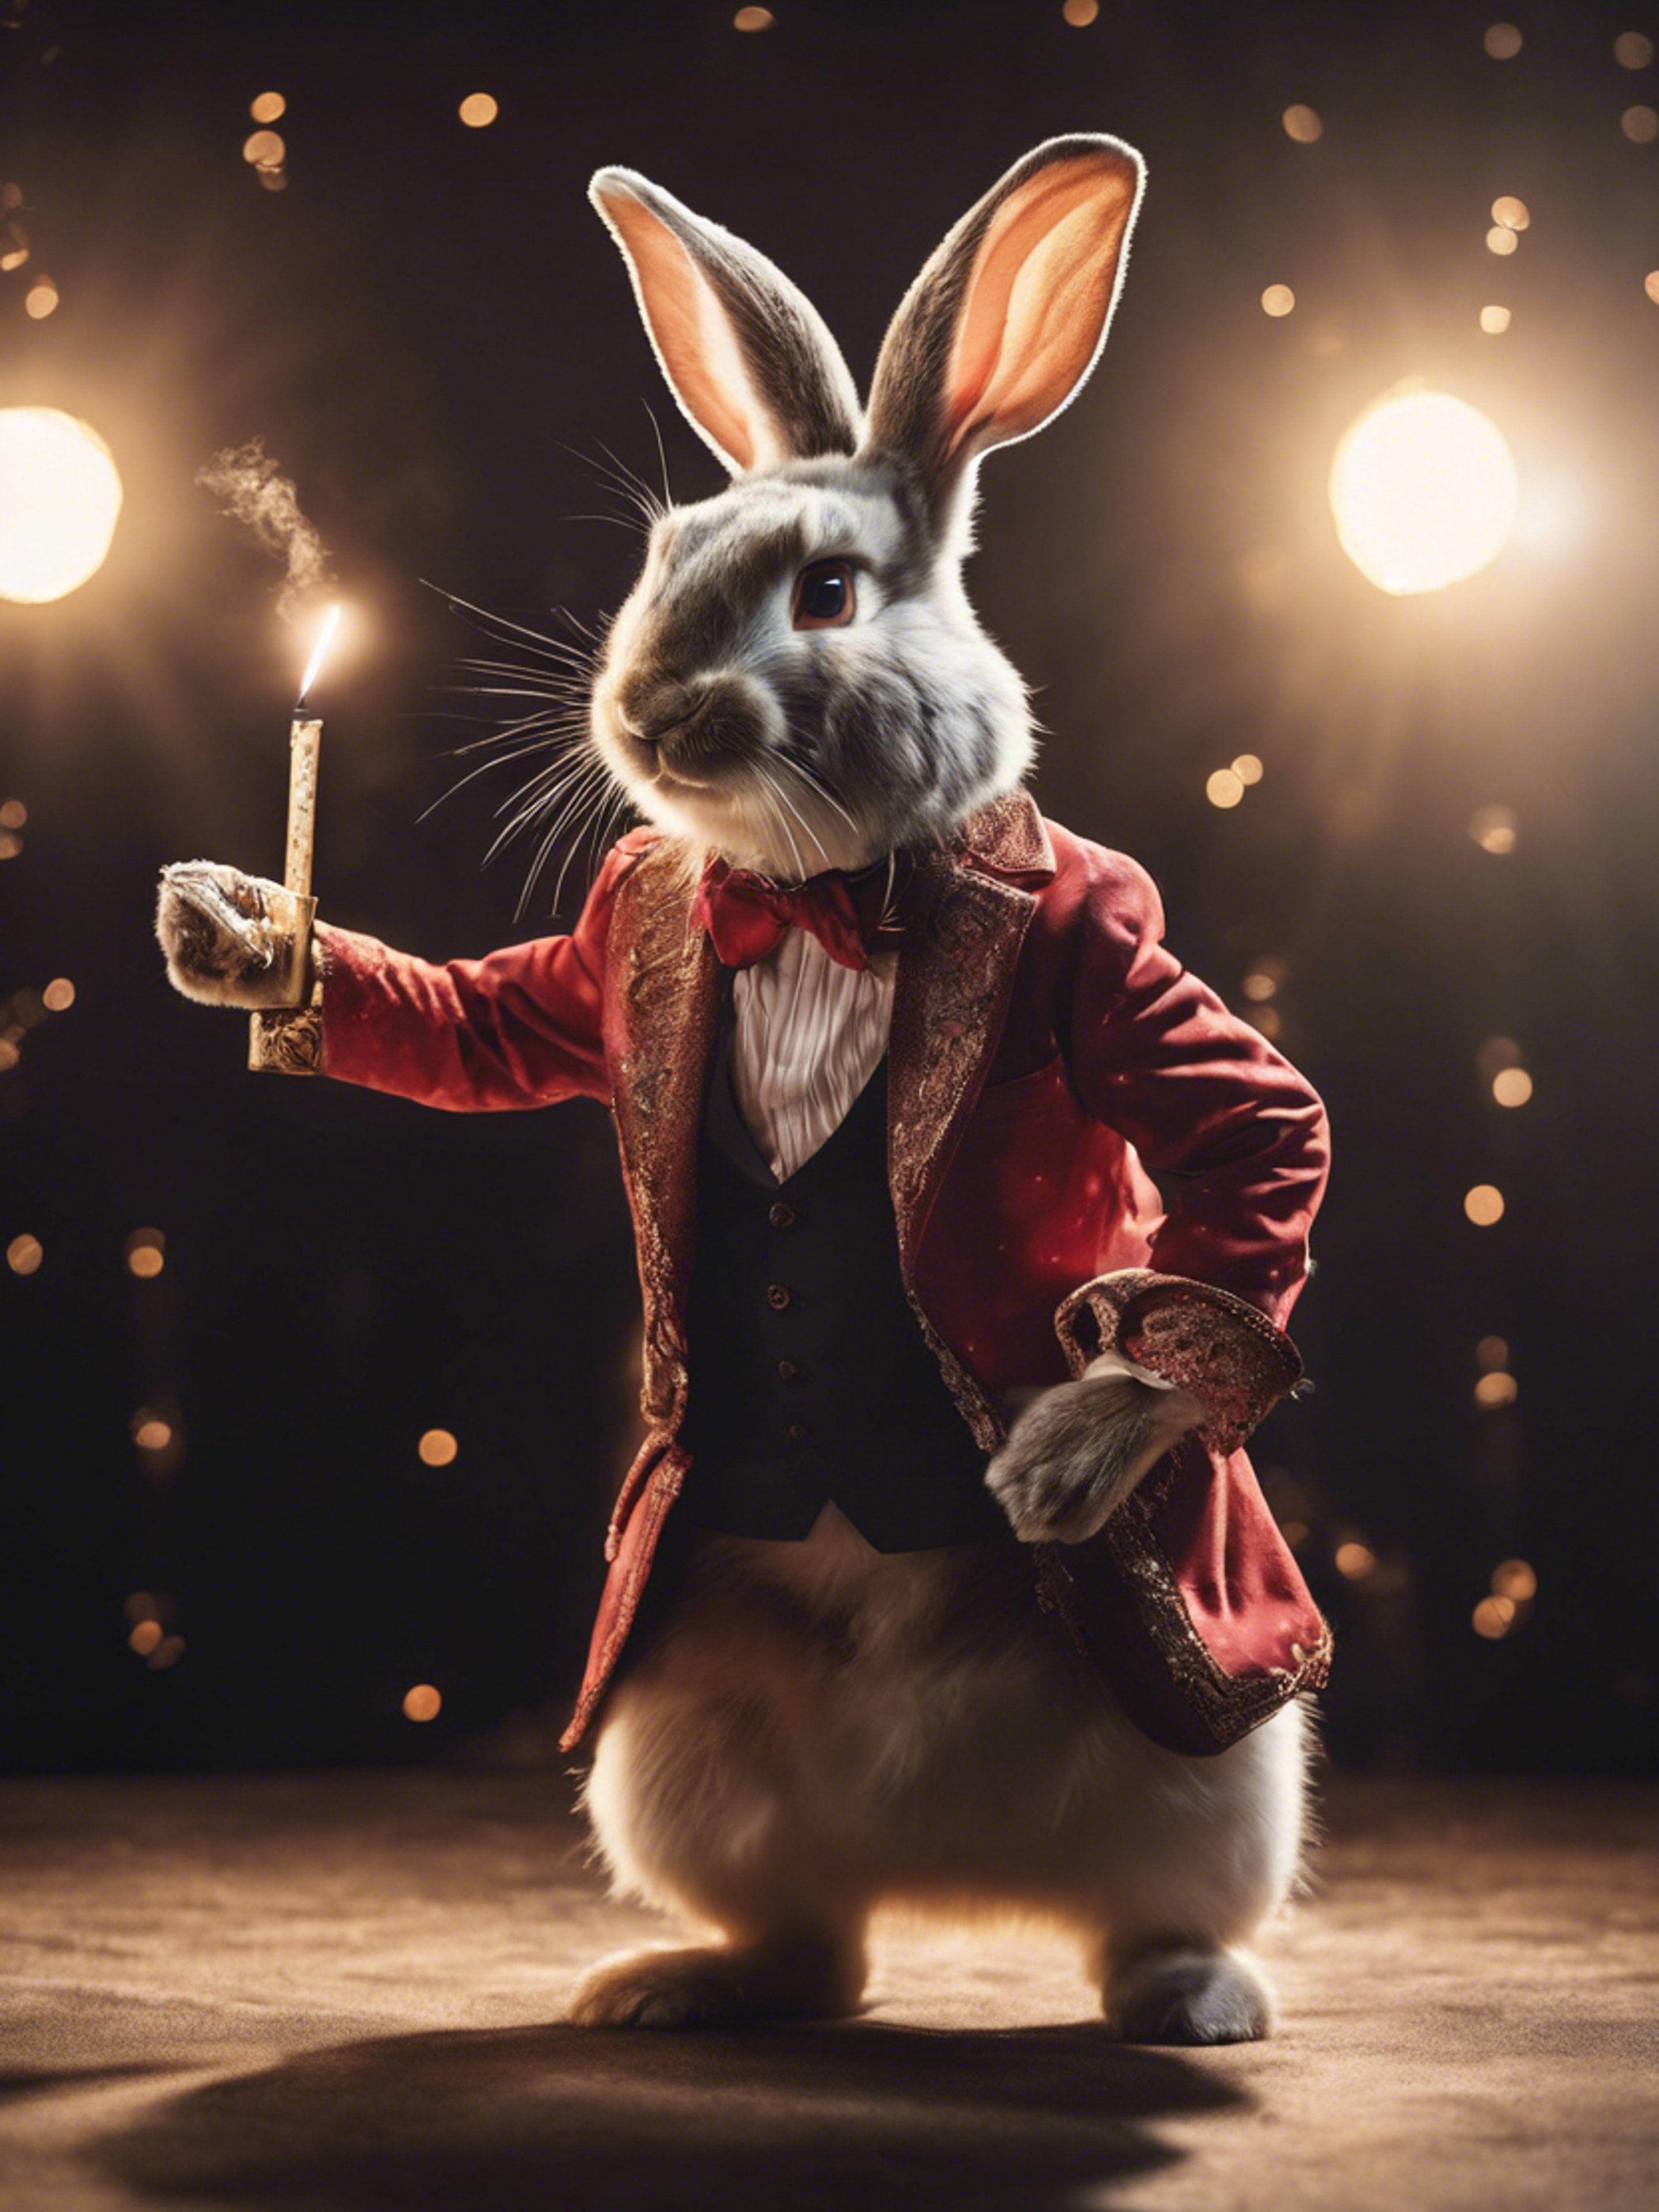 A rabbit magician performing extraordinary tricks on a stage under a spotlight.壁紙[30dd10a95ff64540898f]